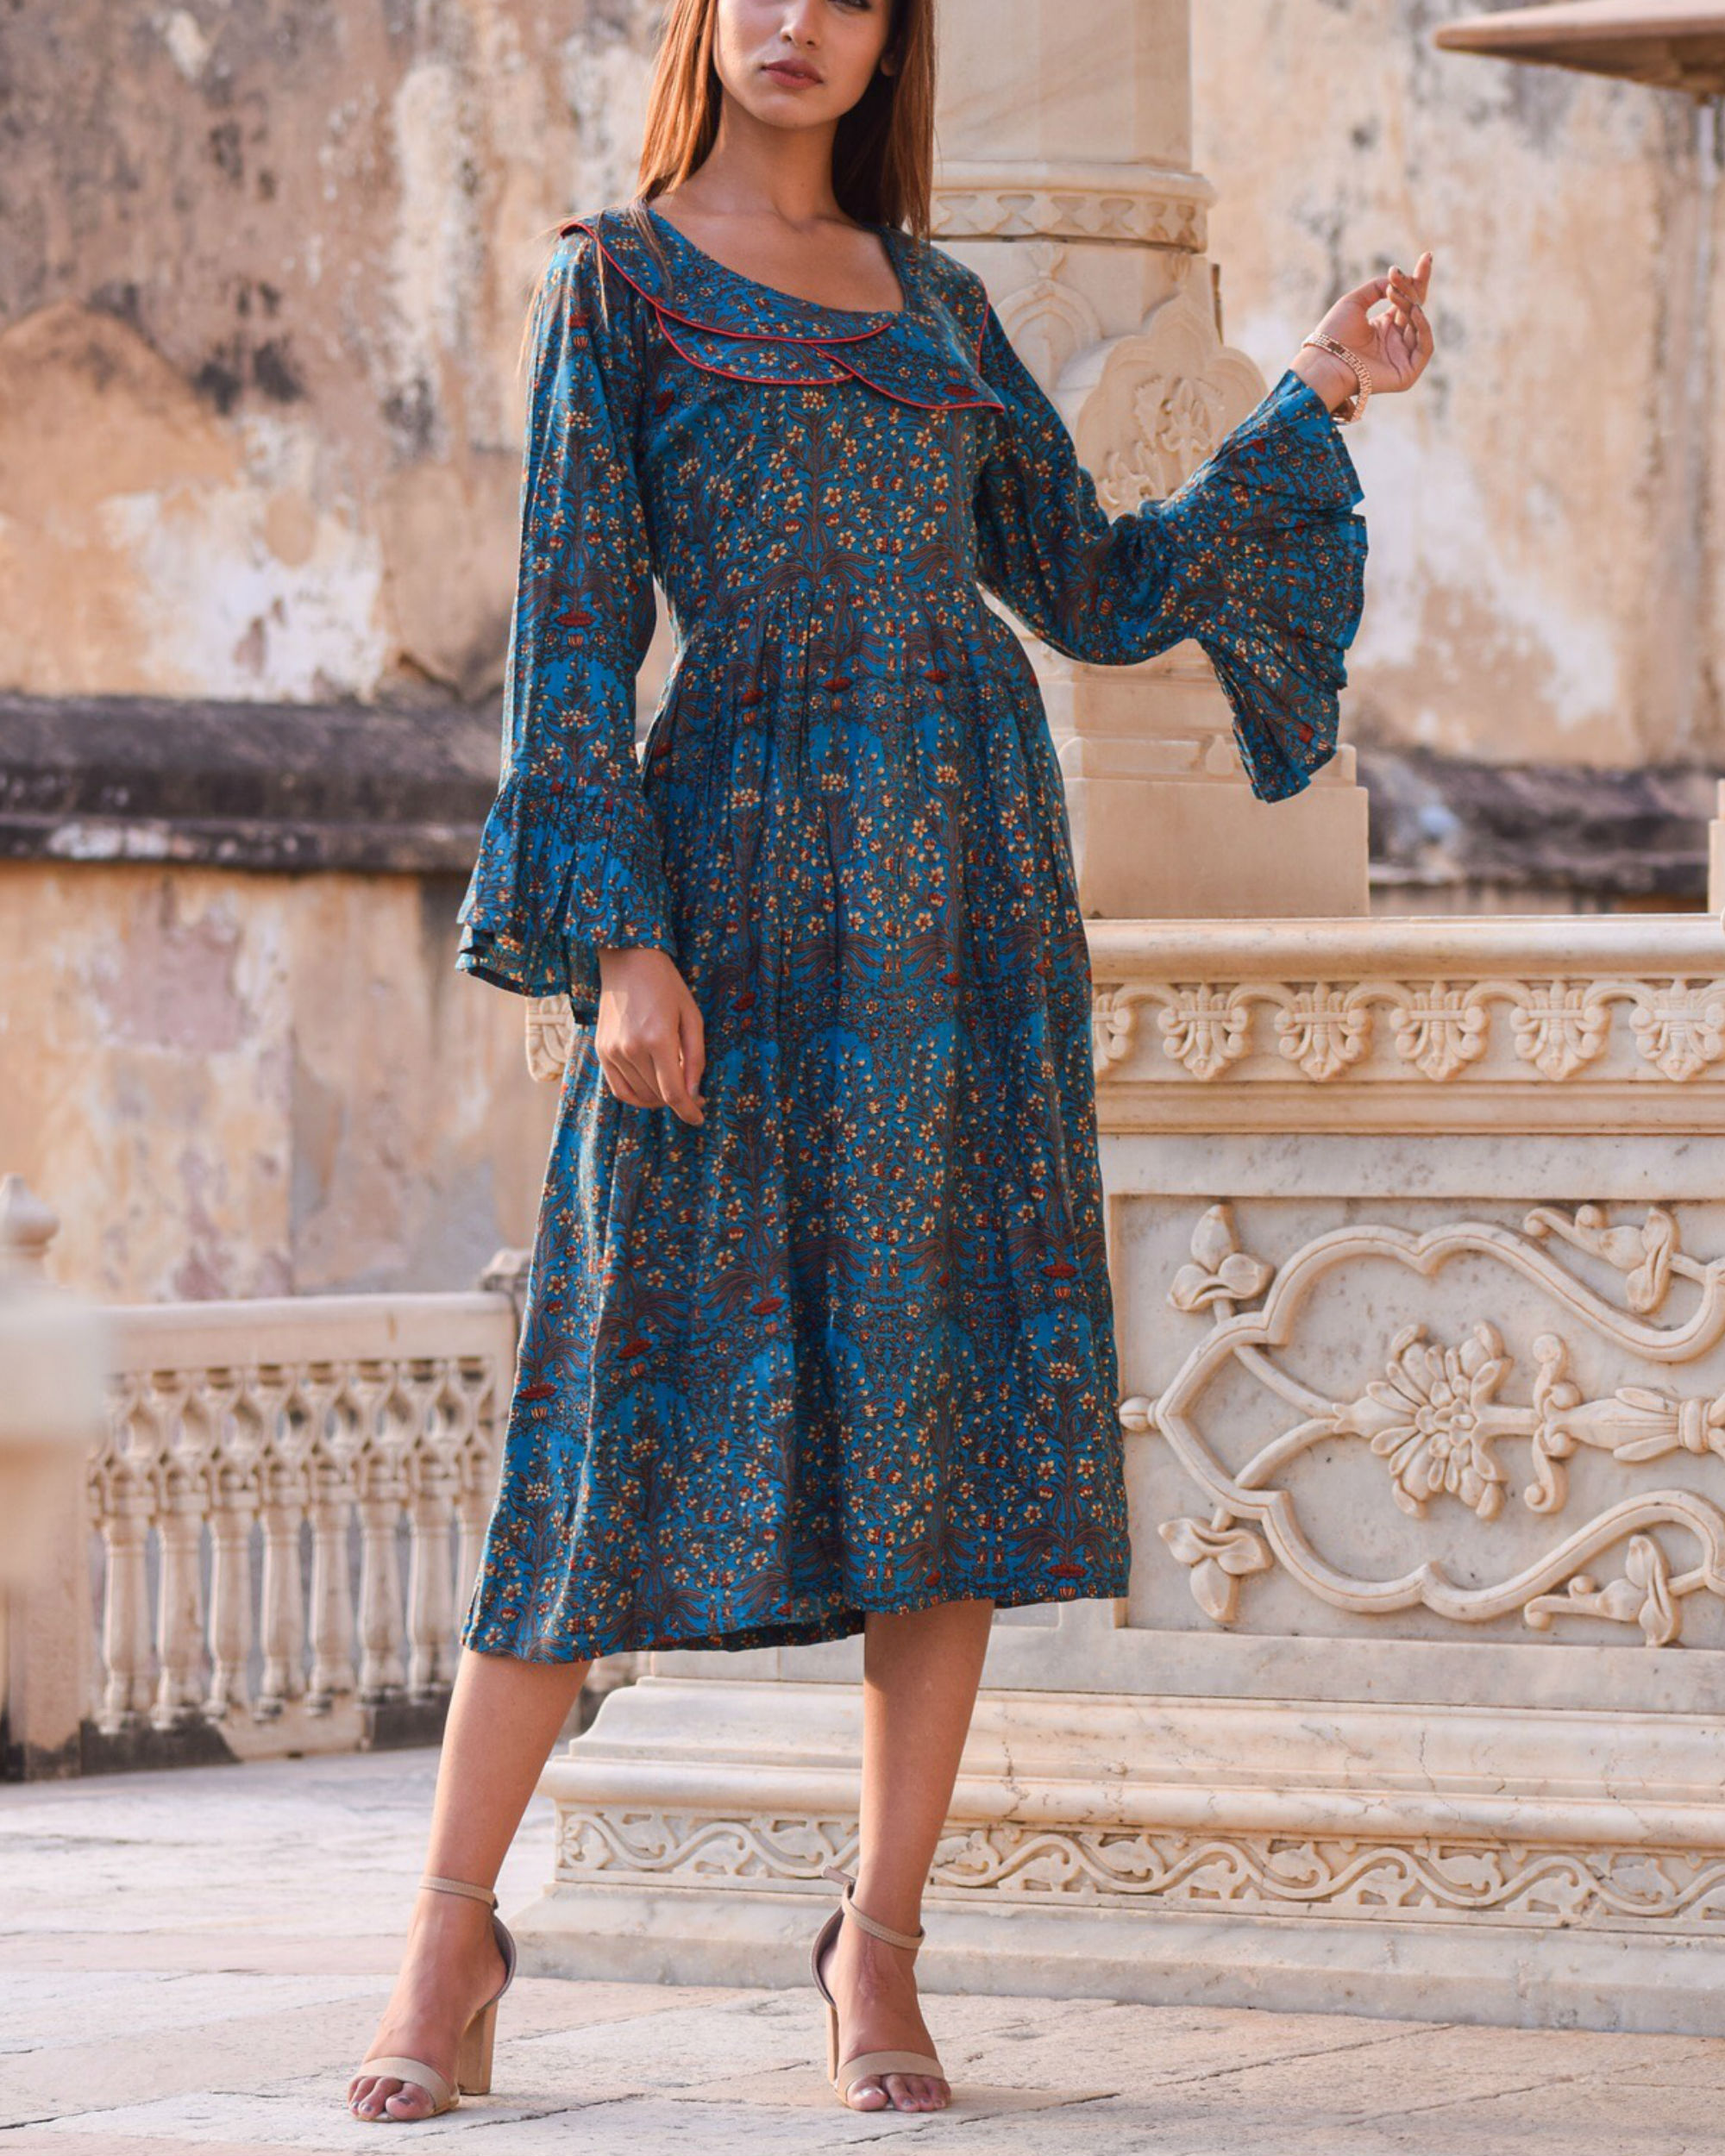 Layered neckline dress by Amari Jaipur | The Secret Label